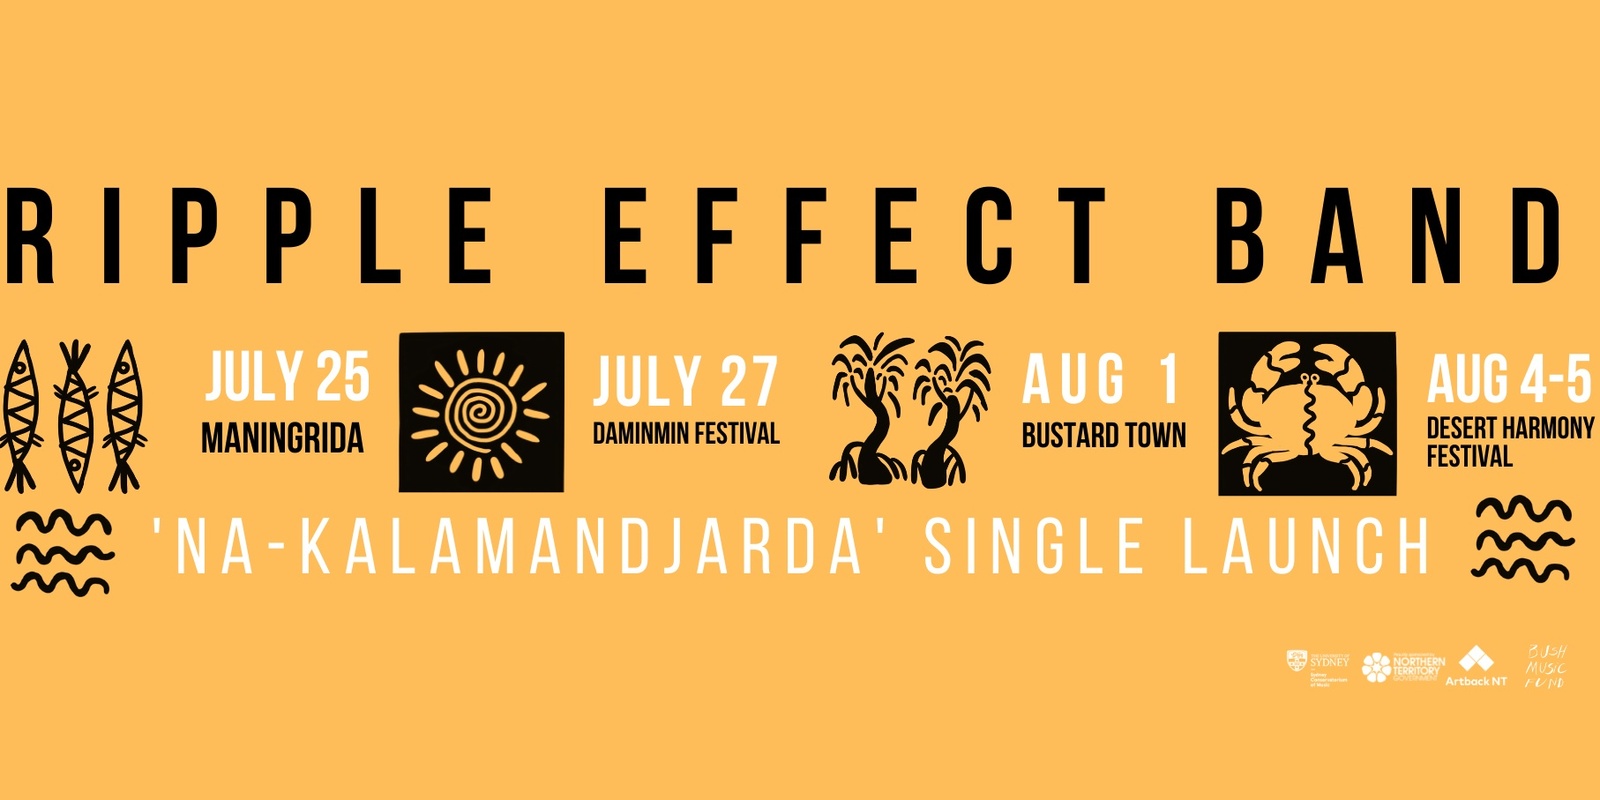 Banner image for Na-kalamandjarda Single Launch Ripple Effect Band